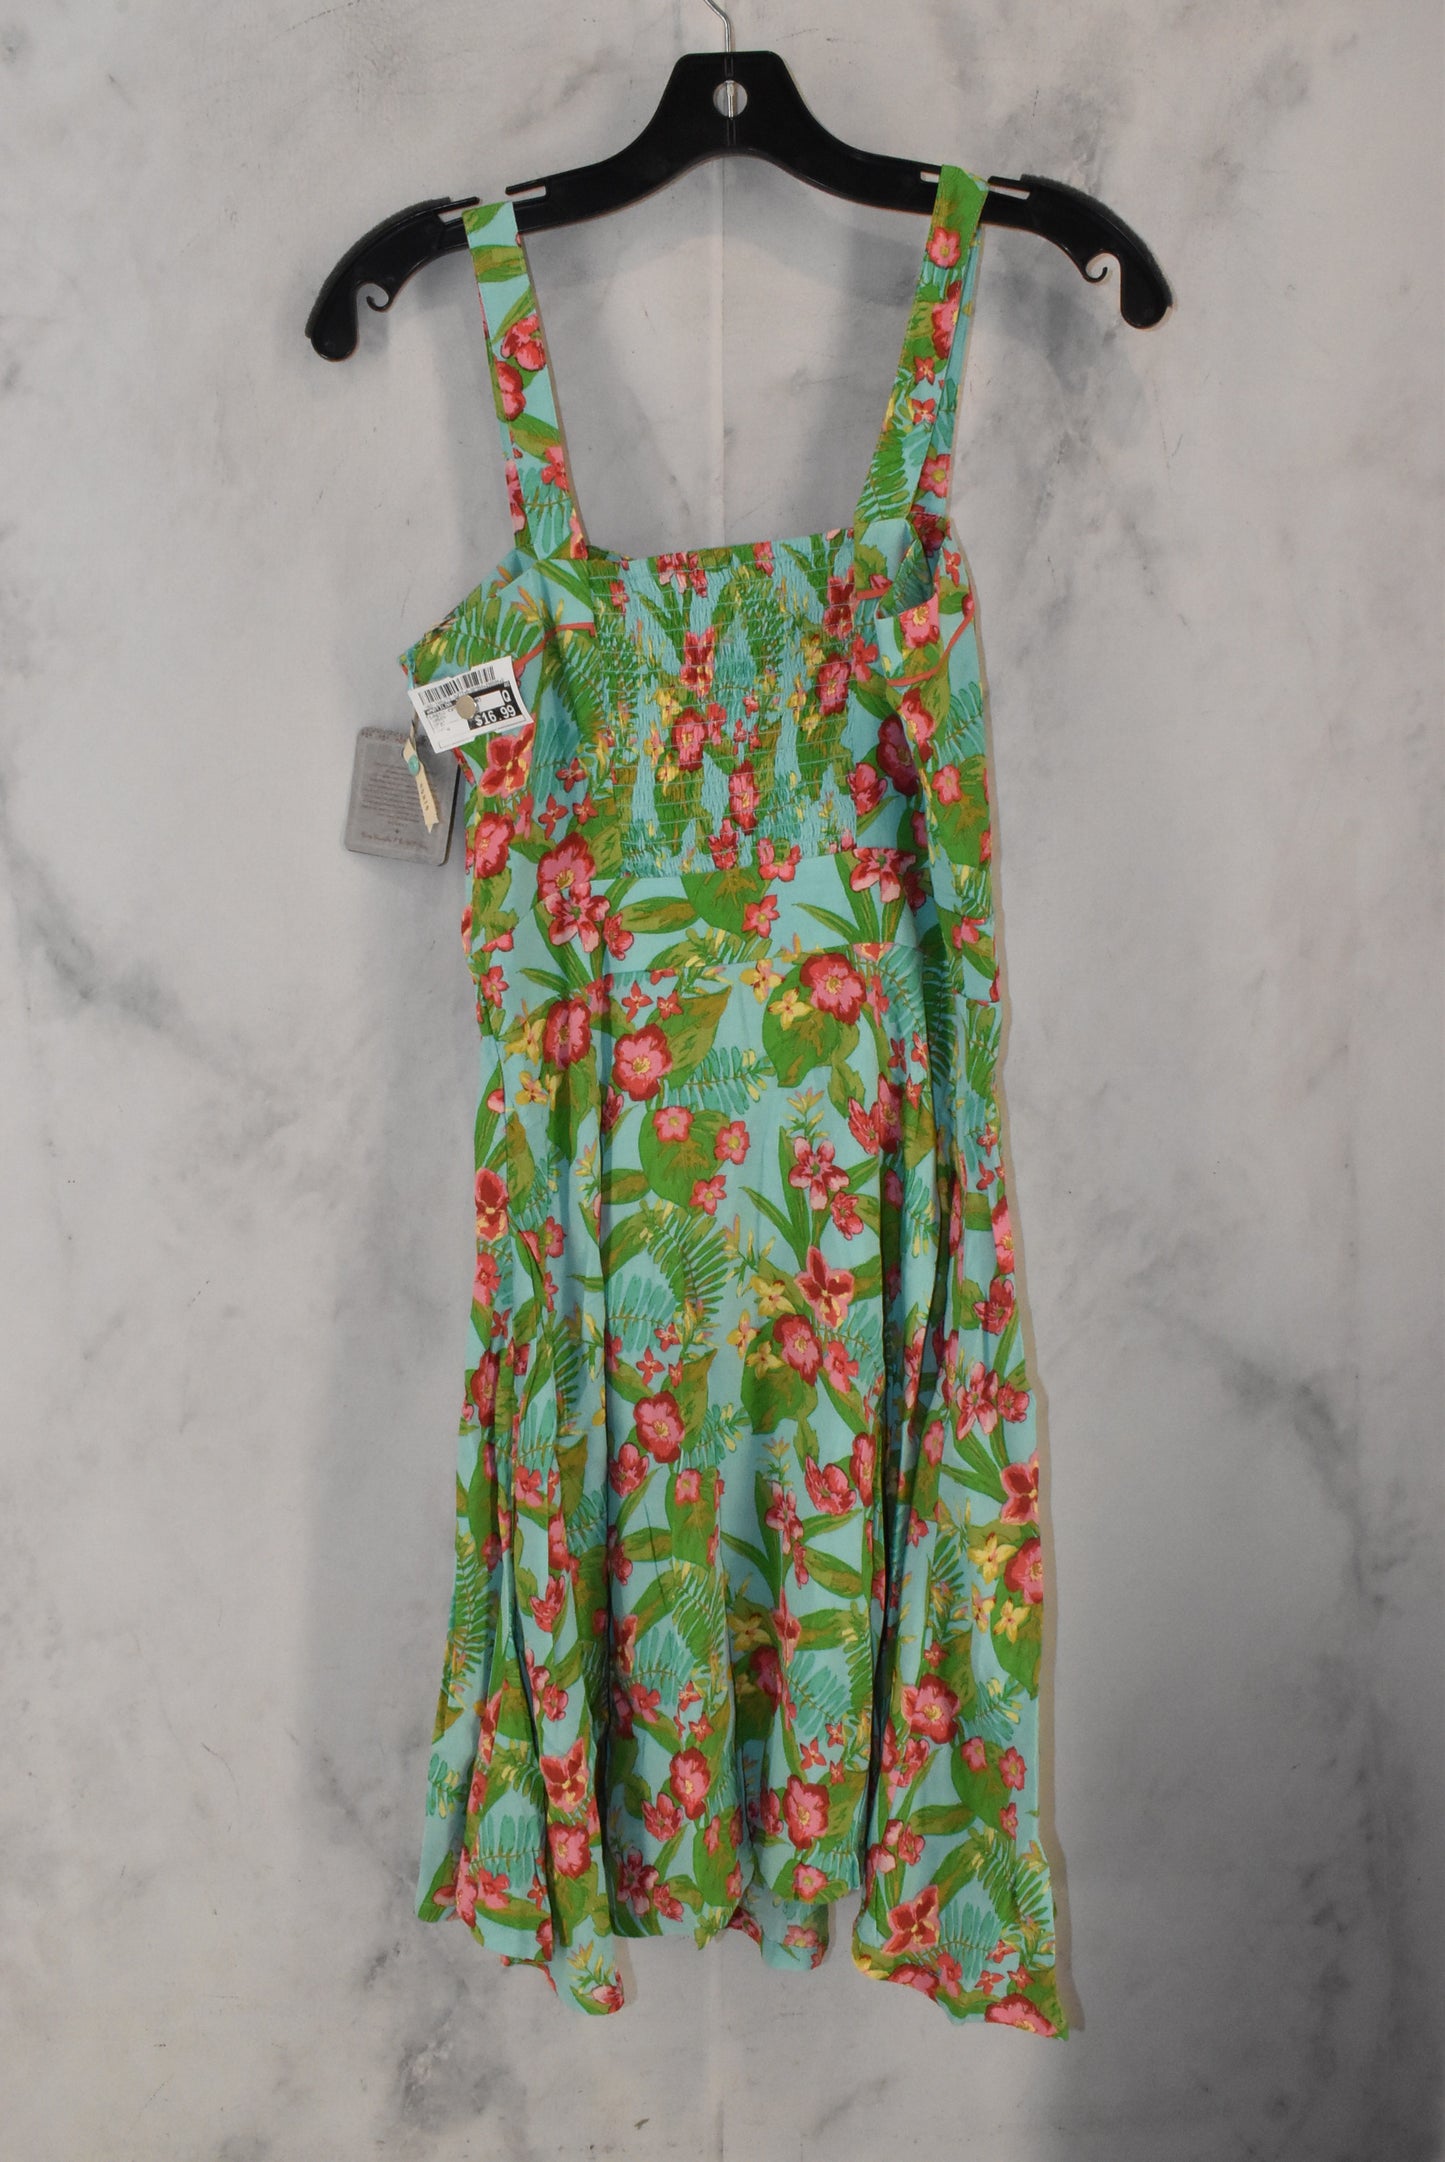 Dress Casual Short By Matilda Jane  Size: 4